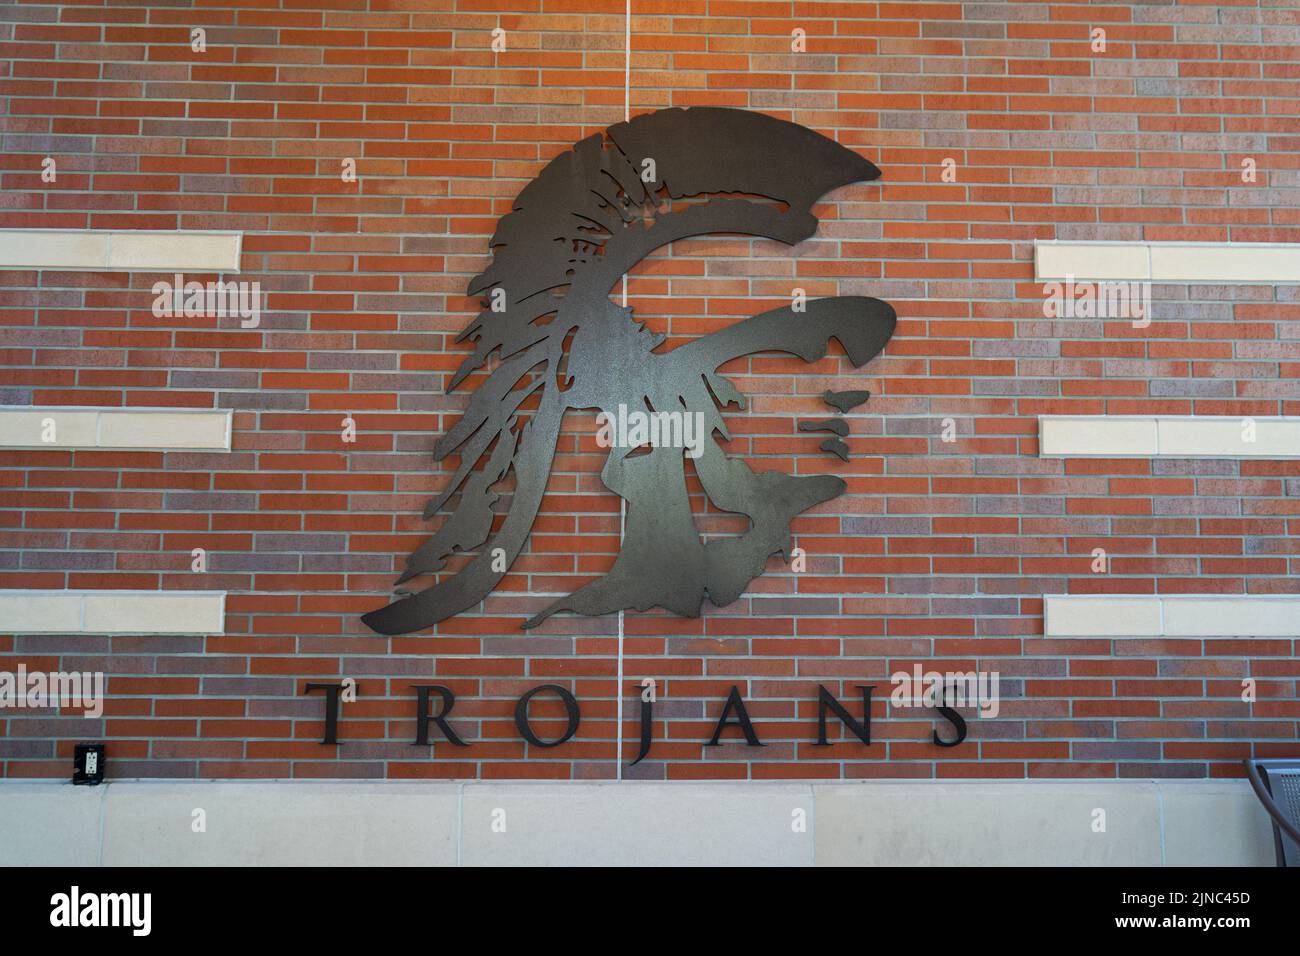 University of Southern California Trojan Logo on a brick wall. Stock Photo